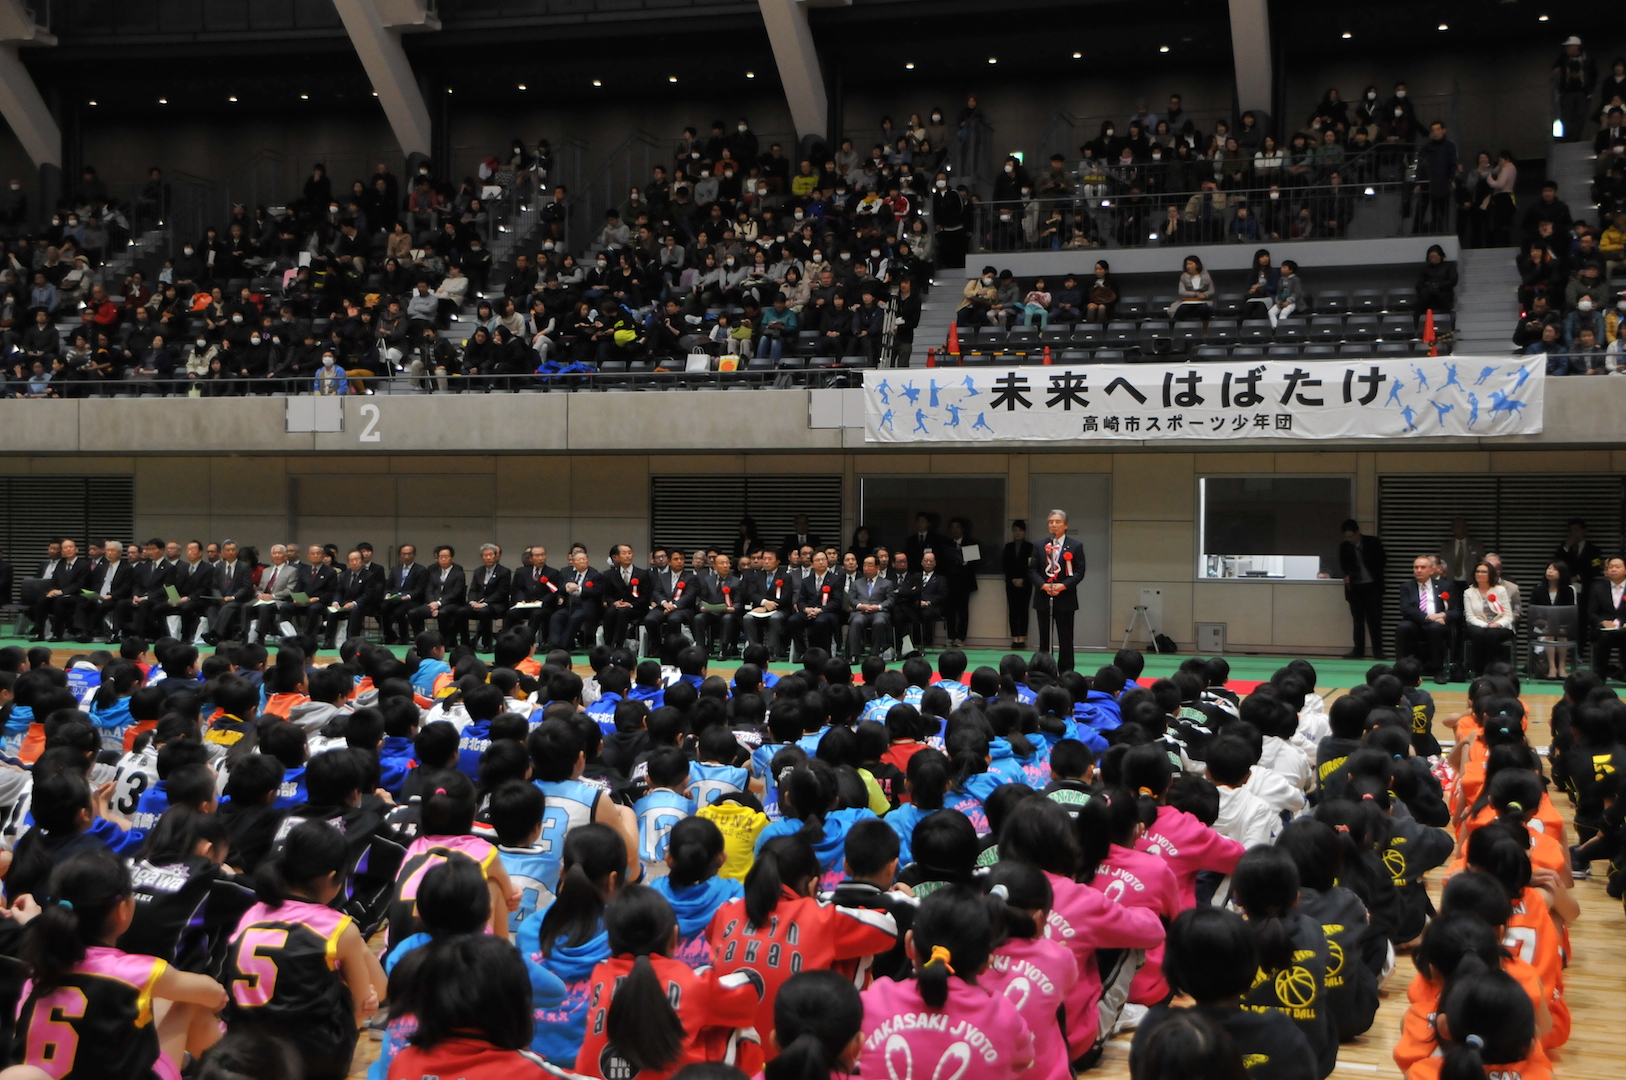 Takasaki Arena Opening Ceremony<br />Takasaki Junior Sports Club Opening Ceremony 5